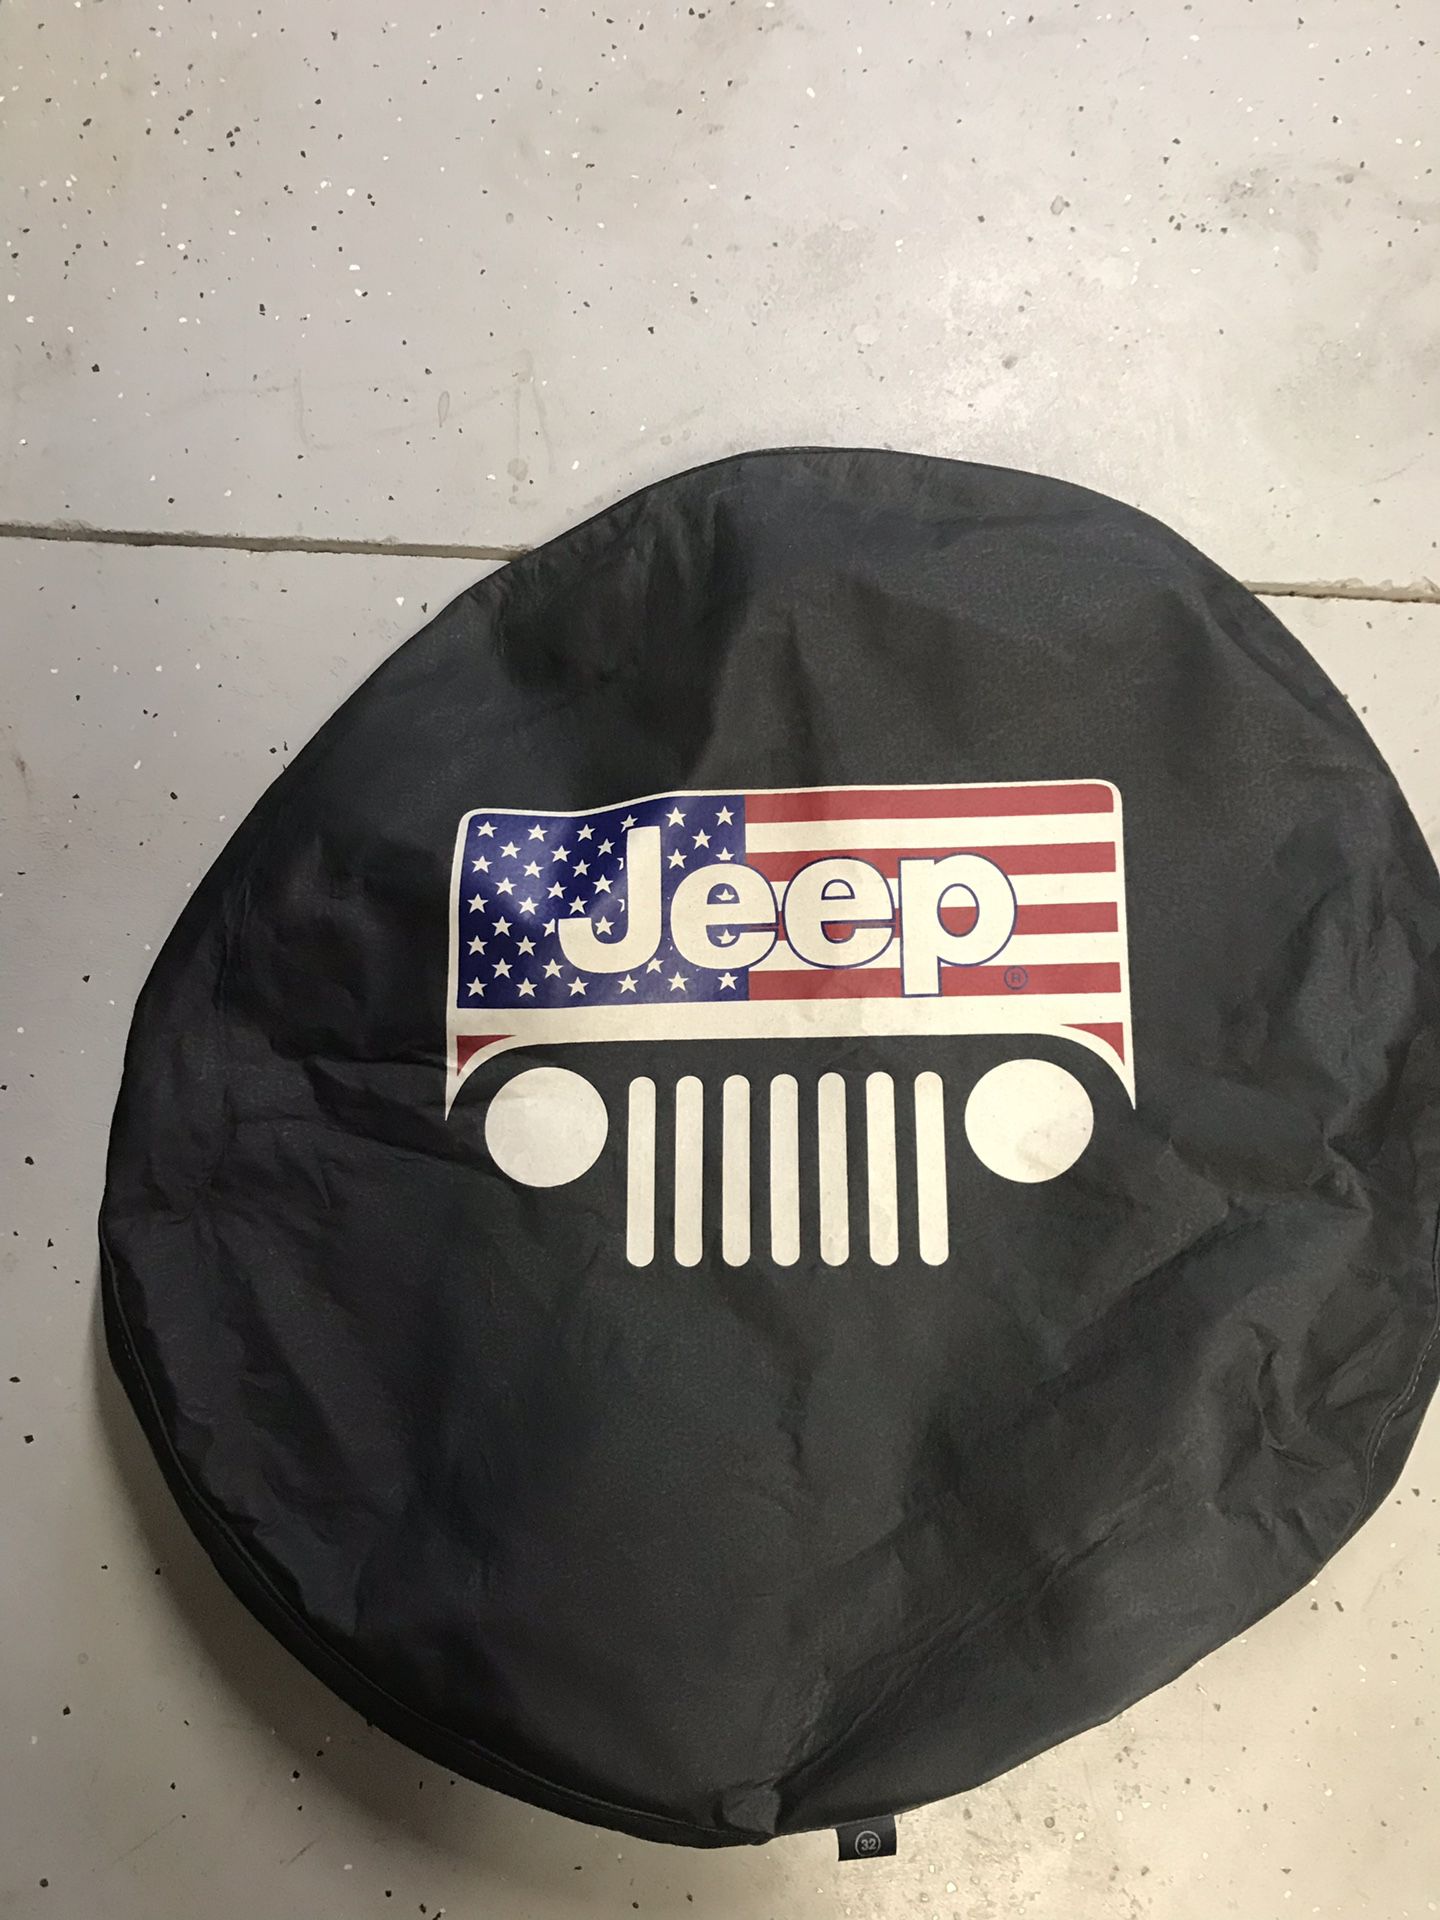 Jeep tire cover